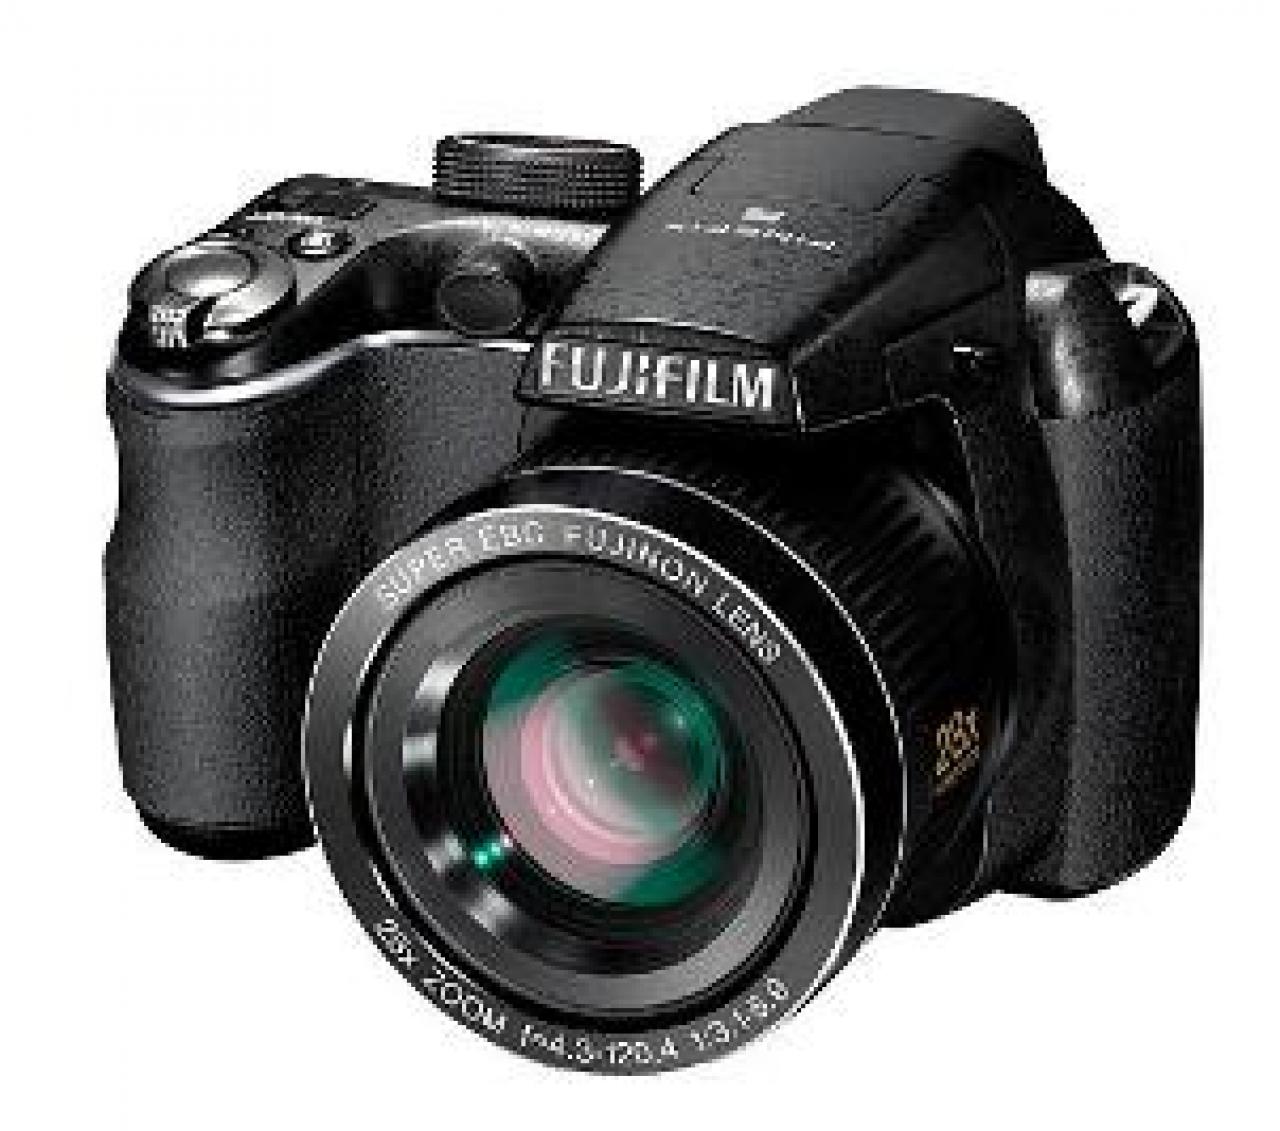 Fujifilm S3400